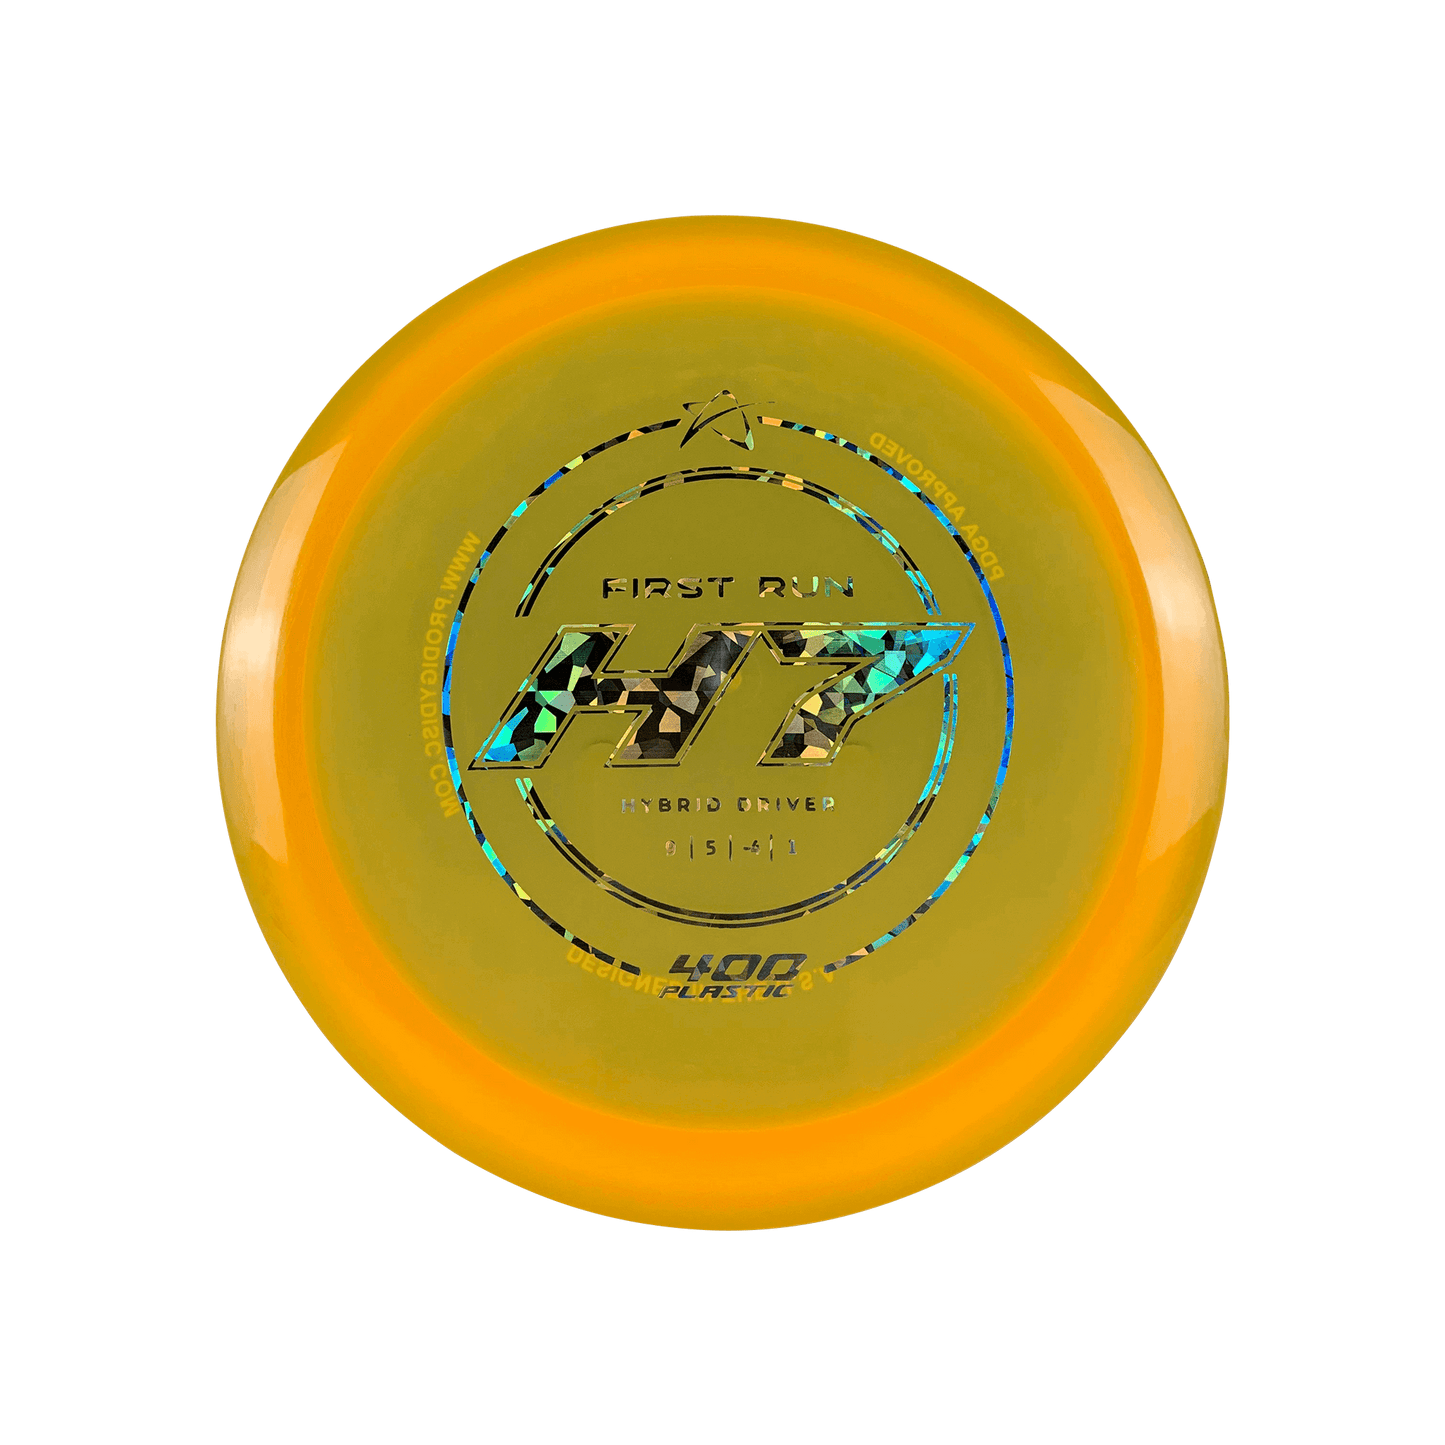 400 H7 - First Run Disc Prodigy yellow 175 